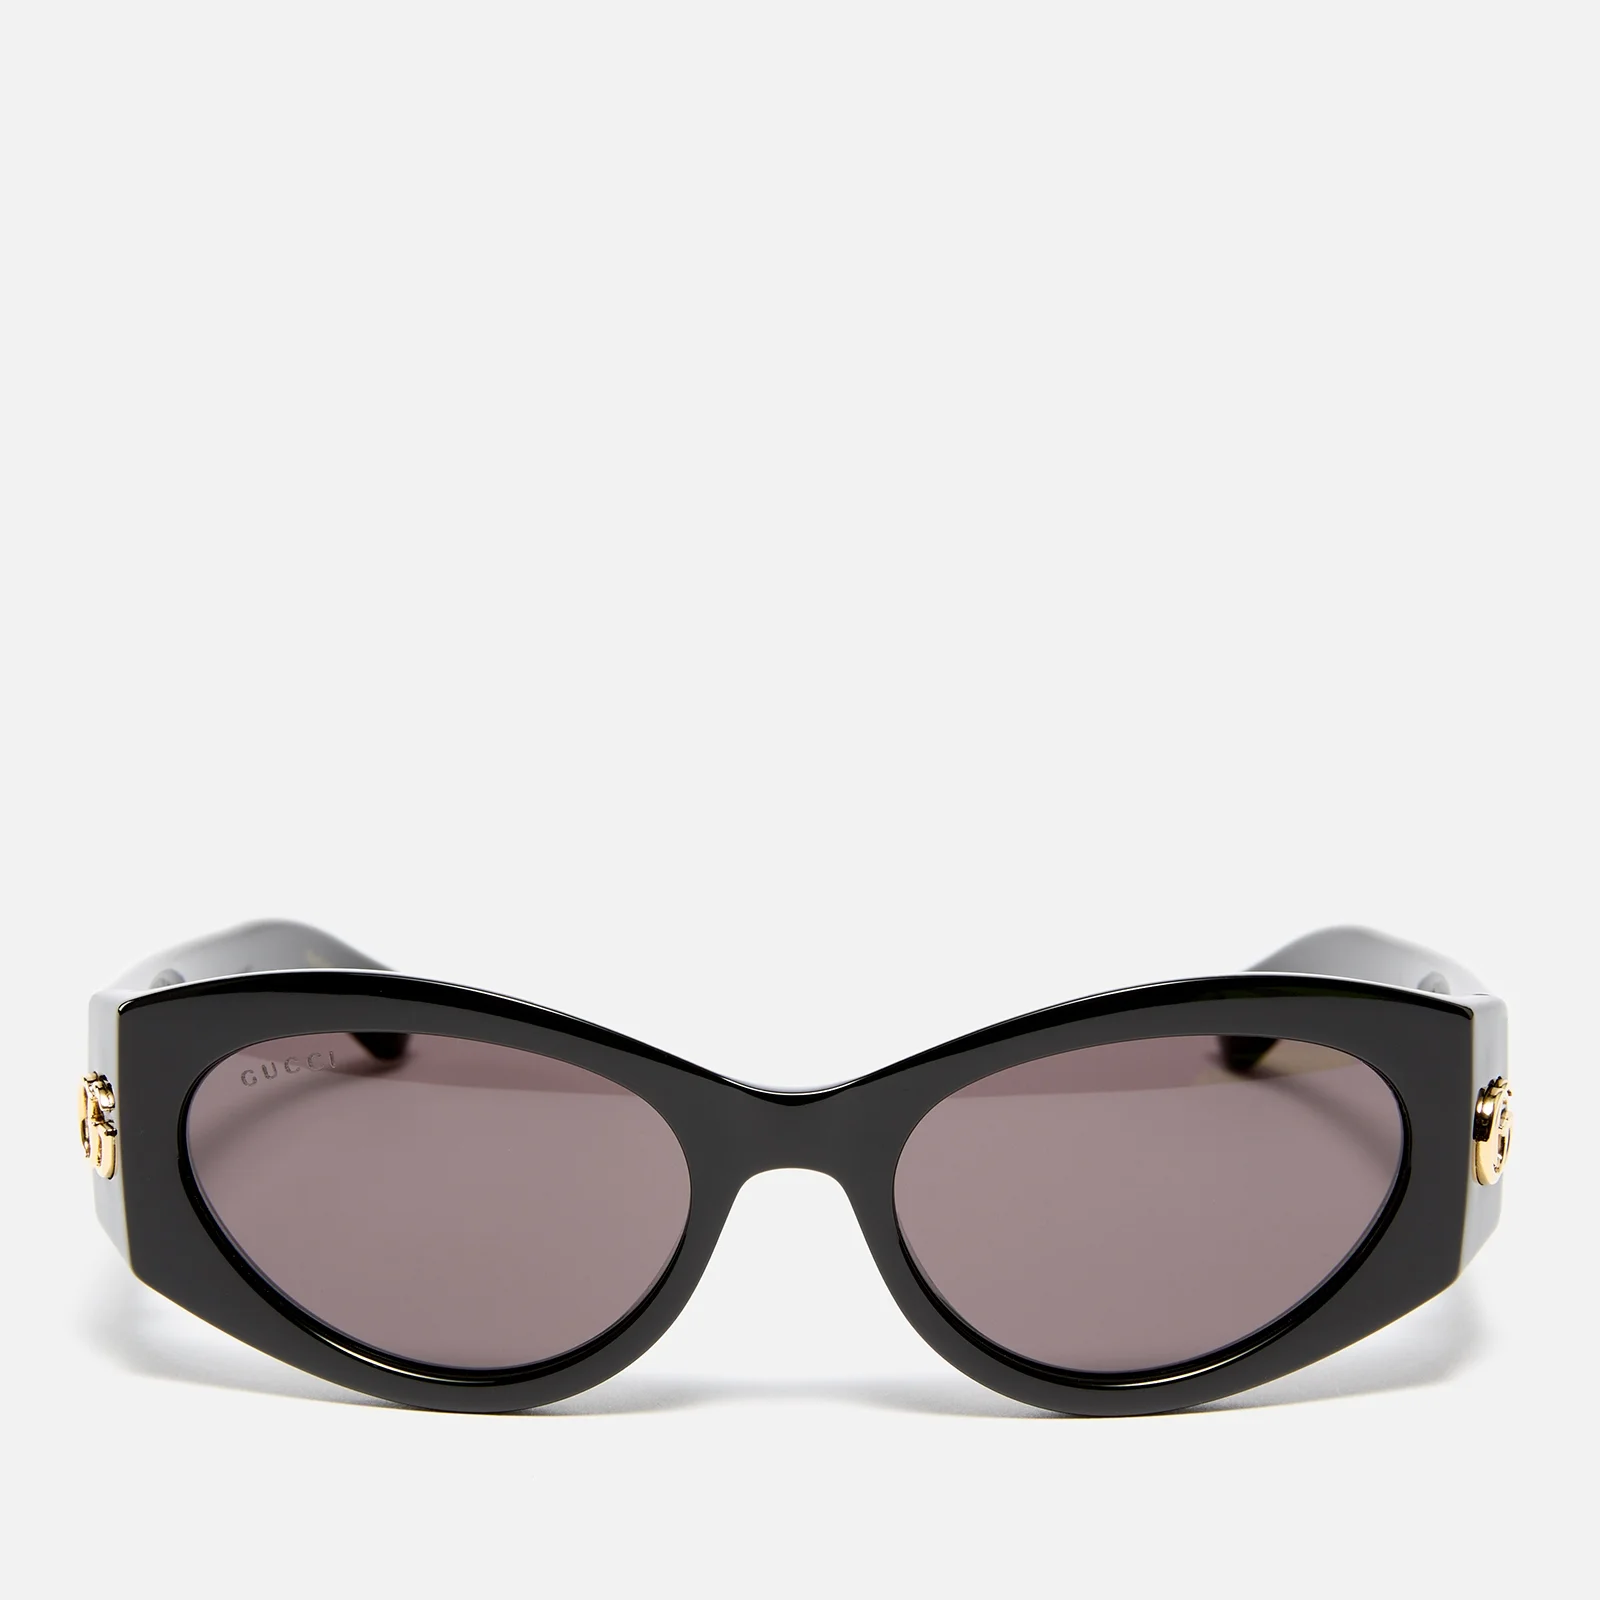 Gucci Acetate Cat Eye Sunglasses Image 1